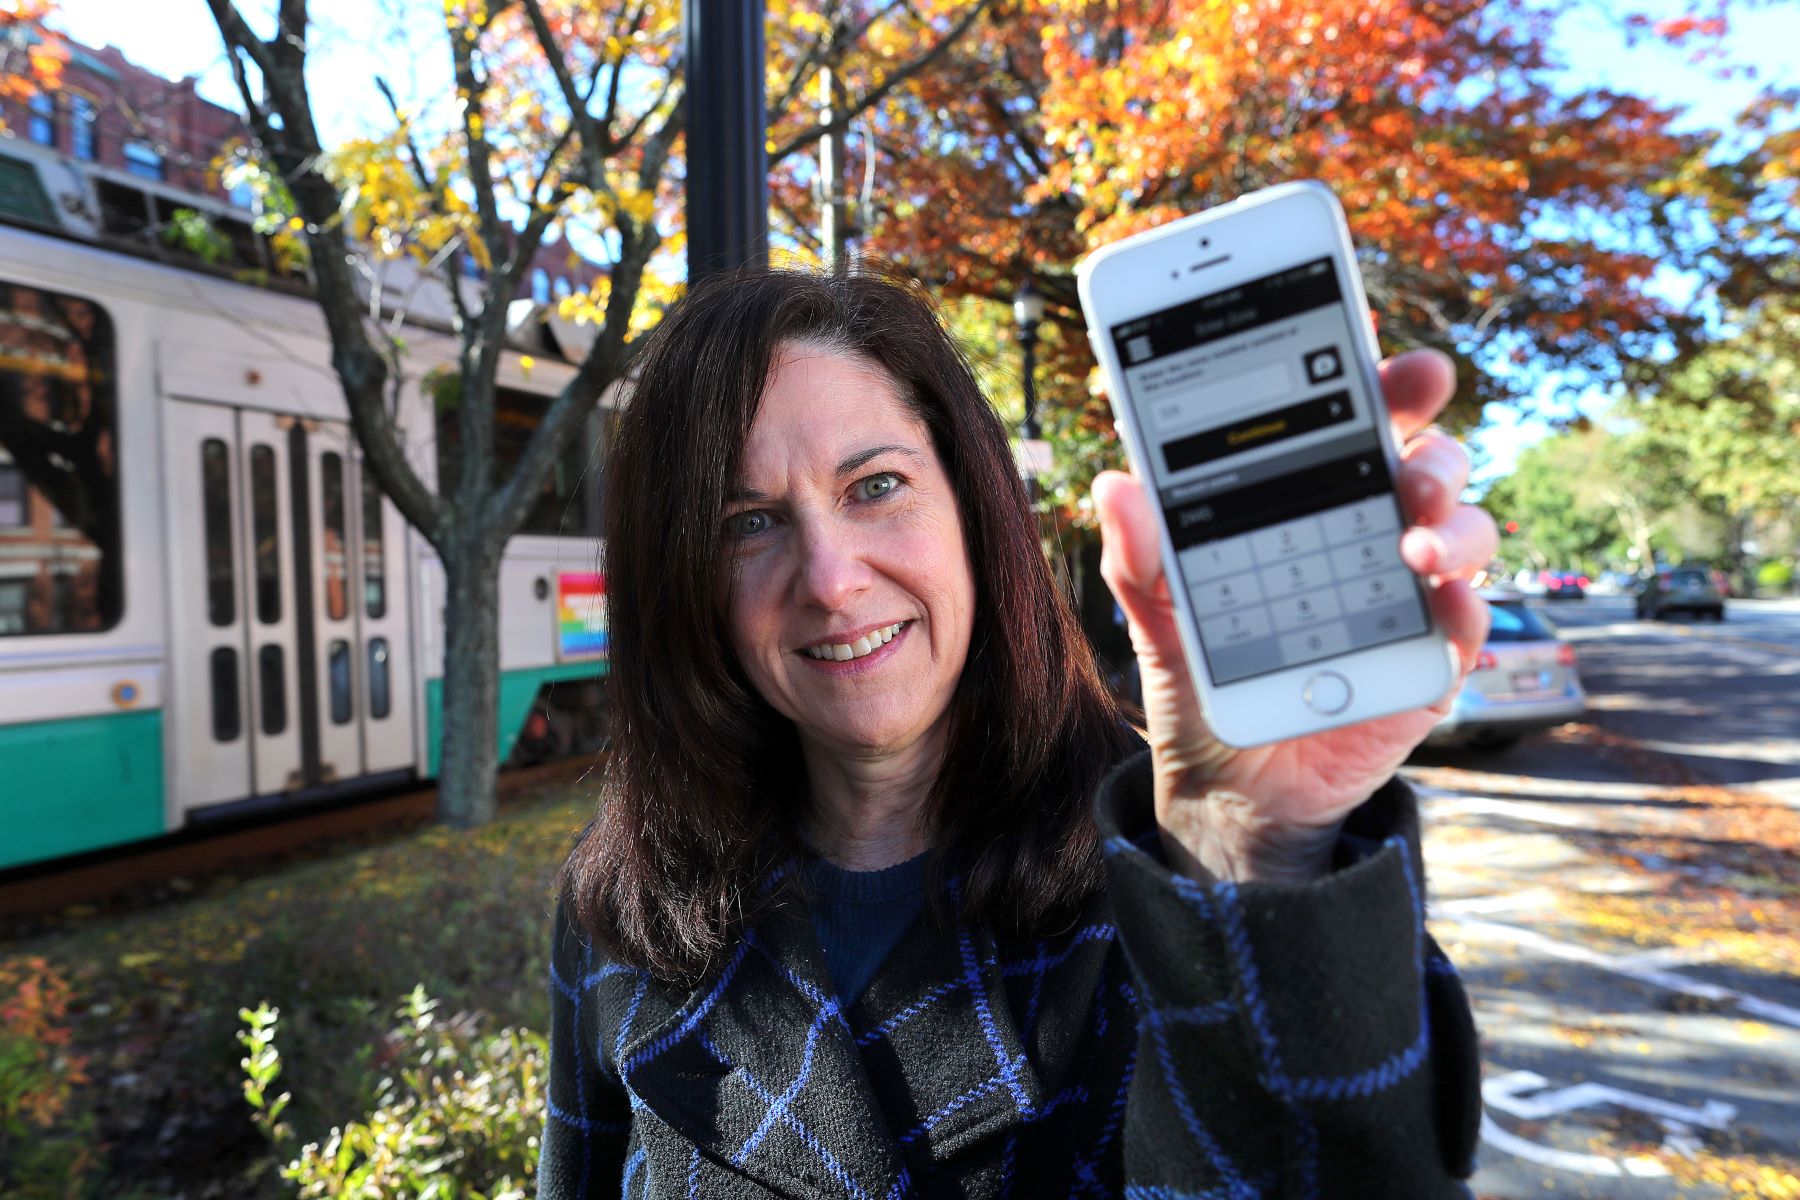 A parking meter app on a smartphone in Brookline, Massachusetts